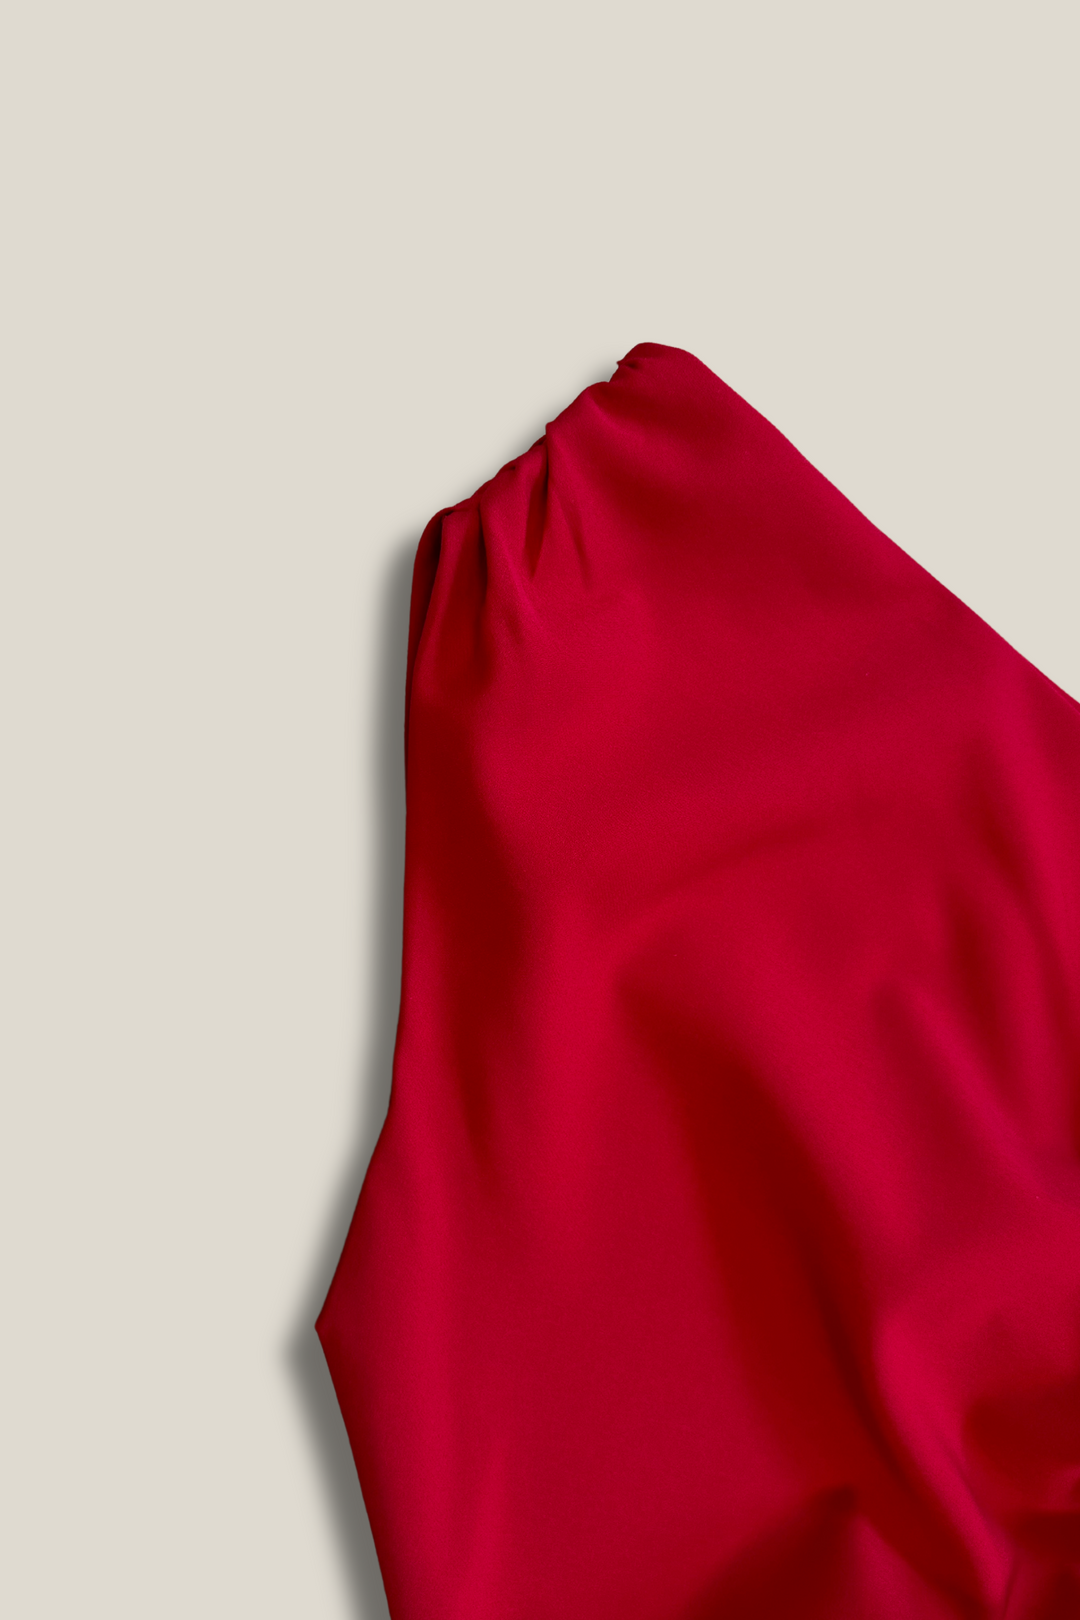 MELBOURNE DRESS RED